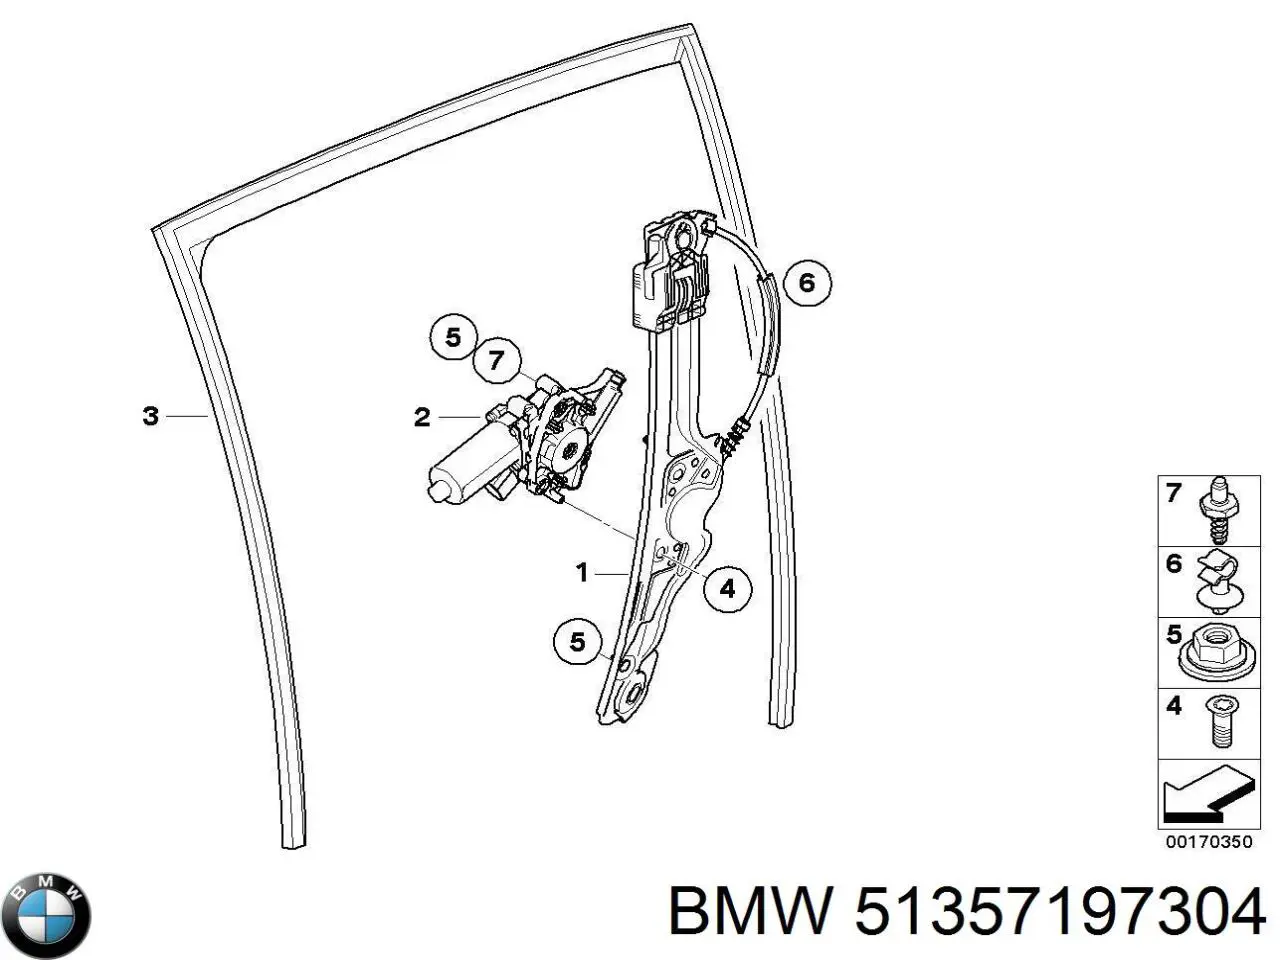 Mecanismo alzacristales, puerta trasera derecha para BMW X6 (E72)